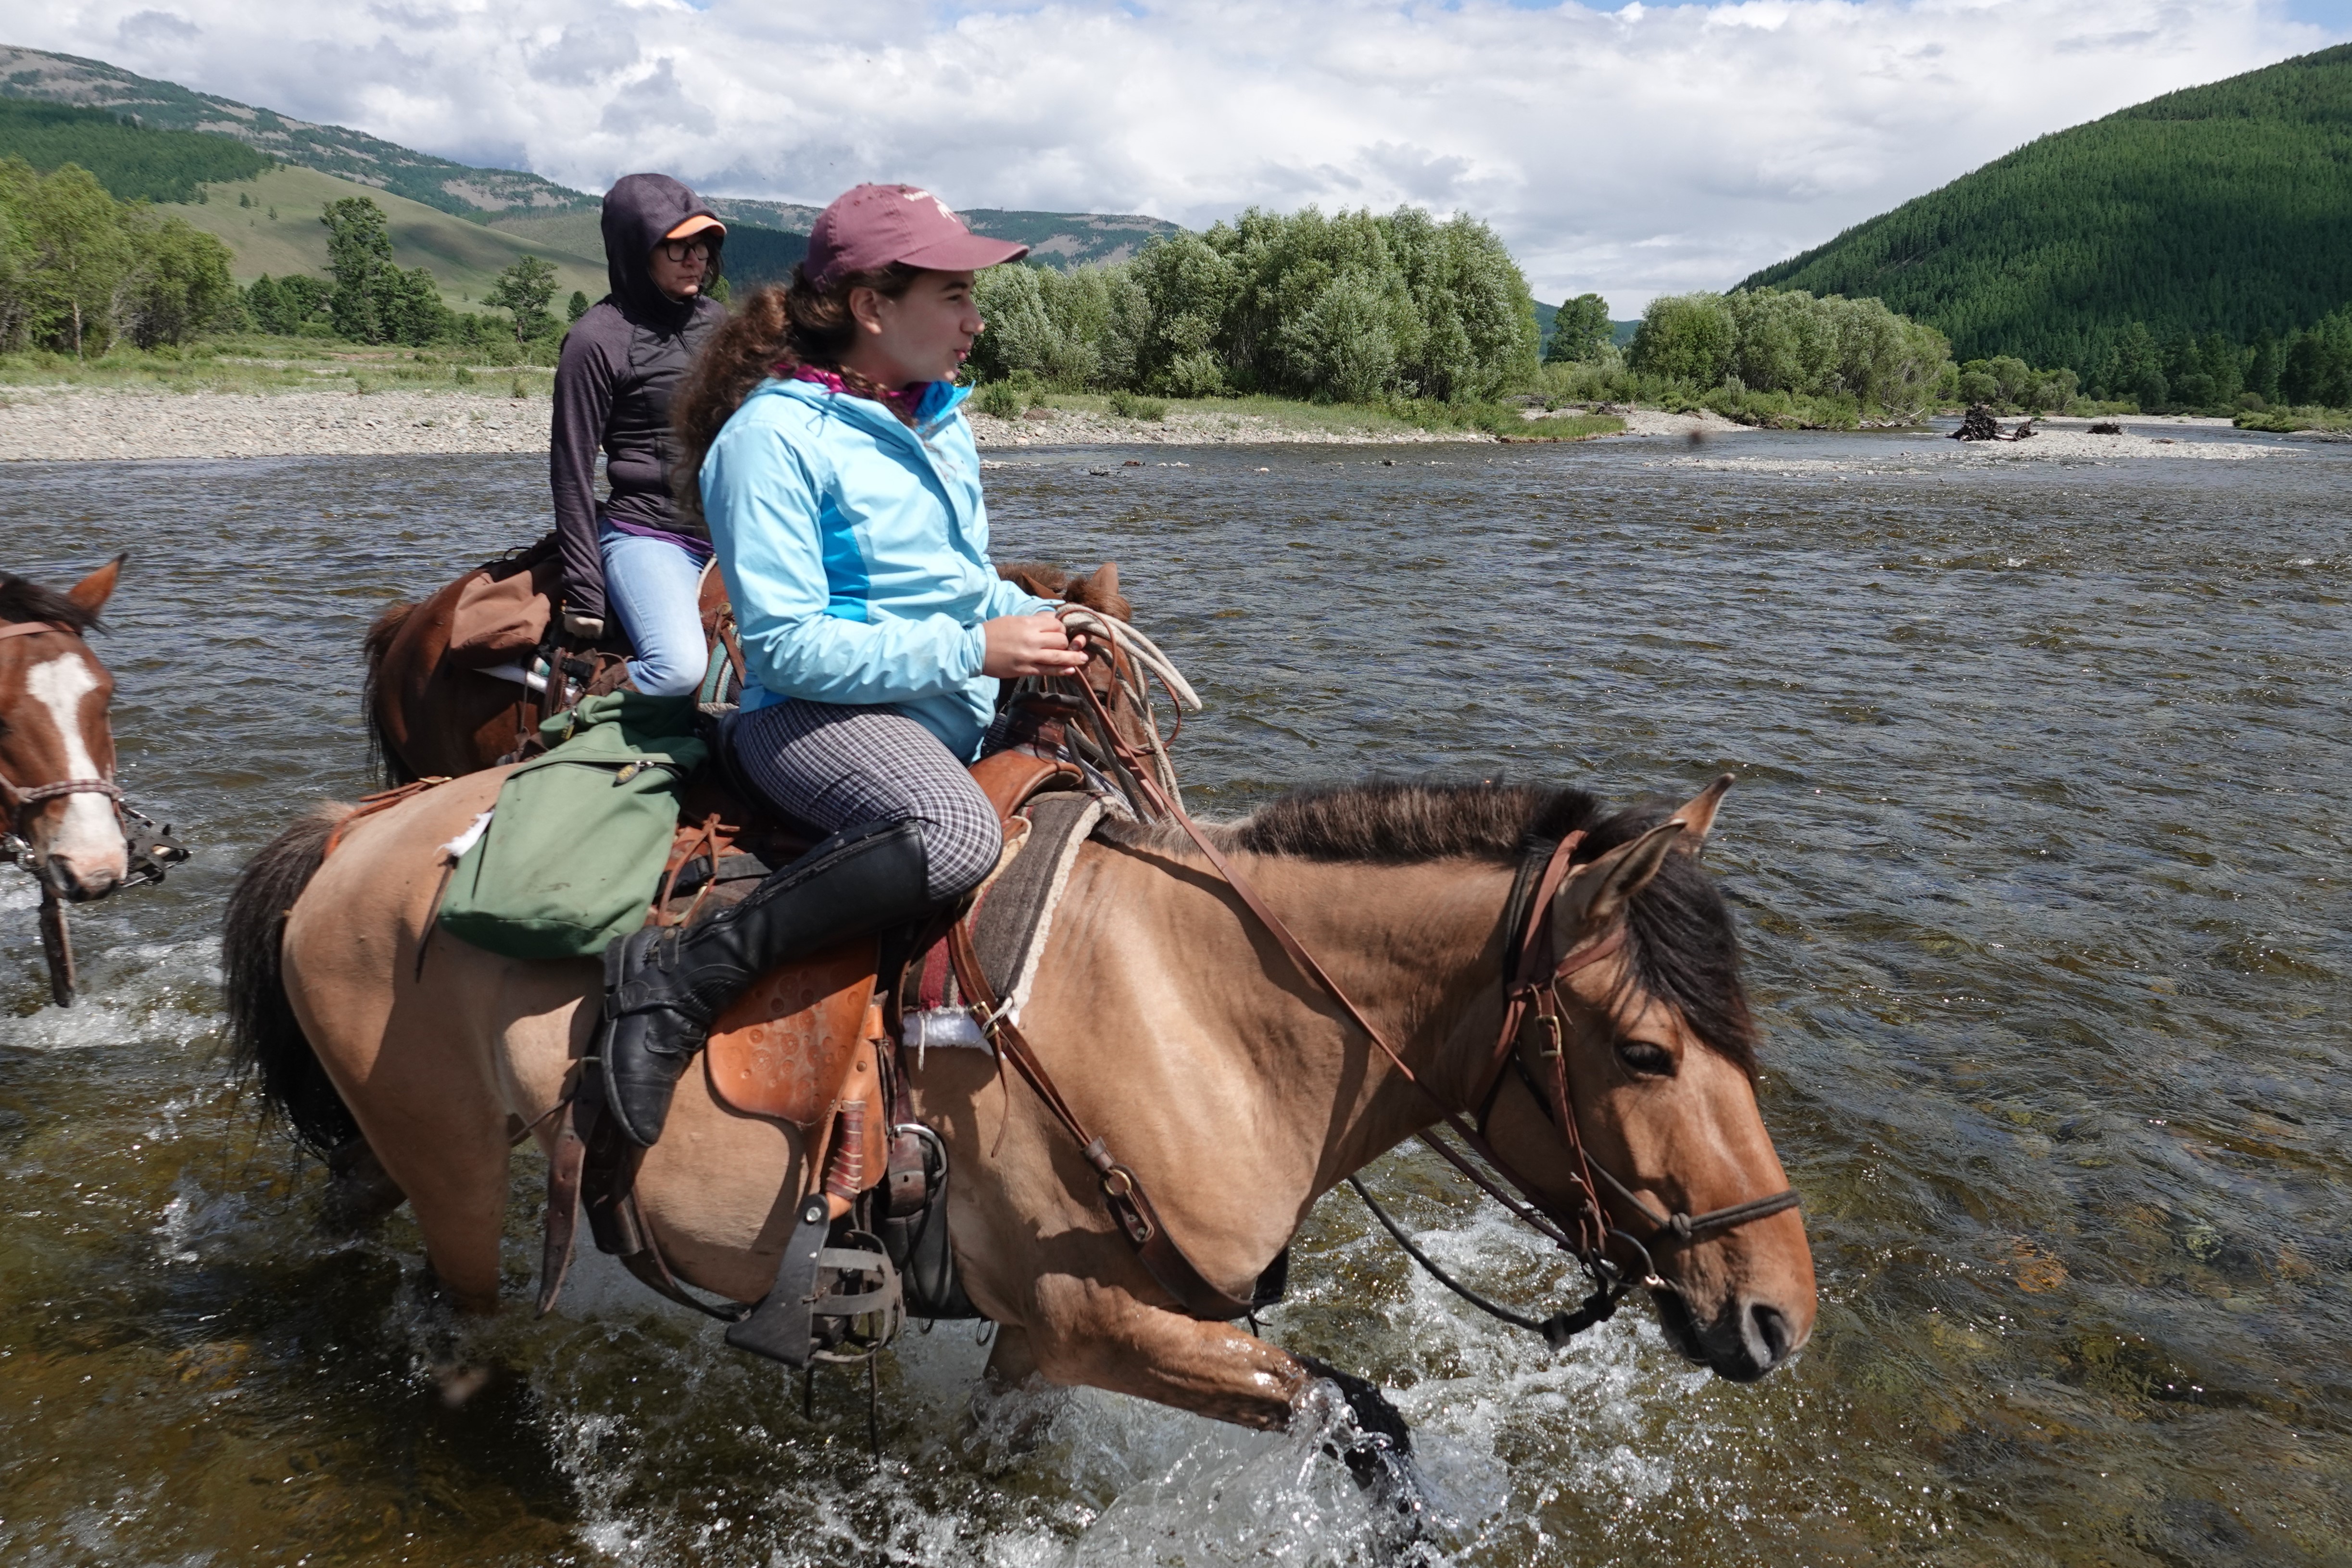 Horse Riding Mongolia – One Day Trail Rides, Stone Horse Mongolia